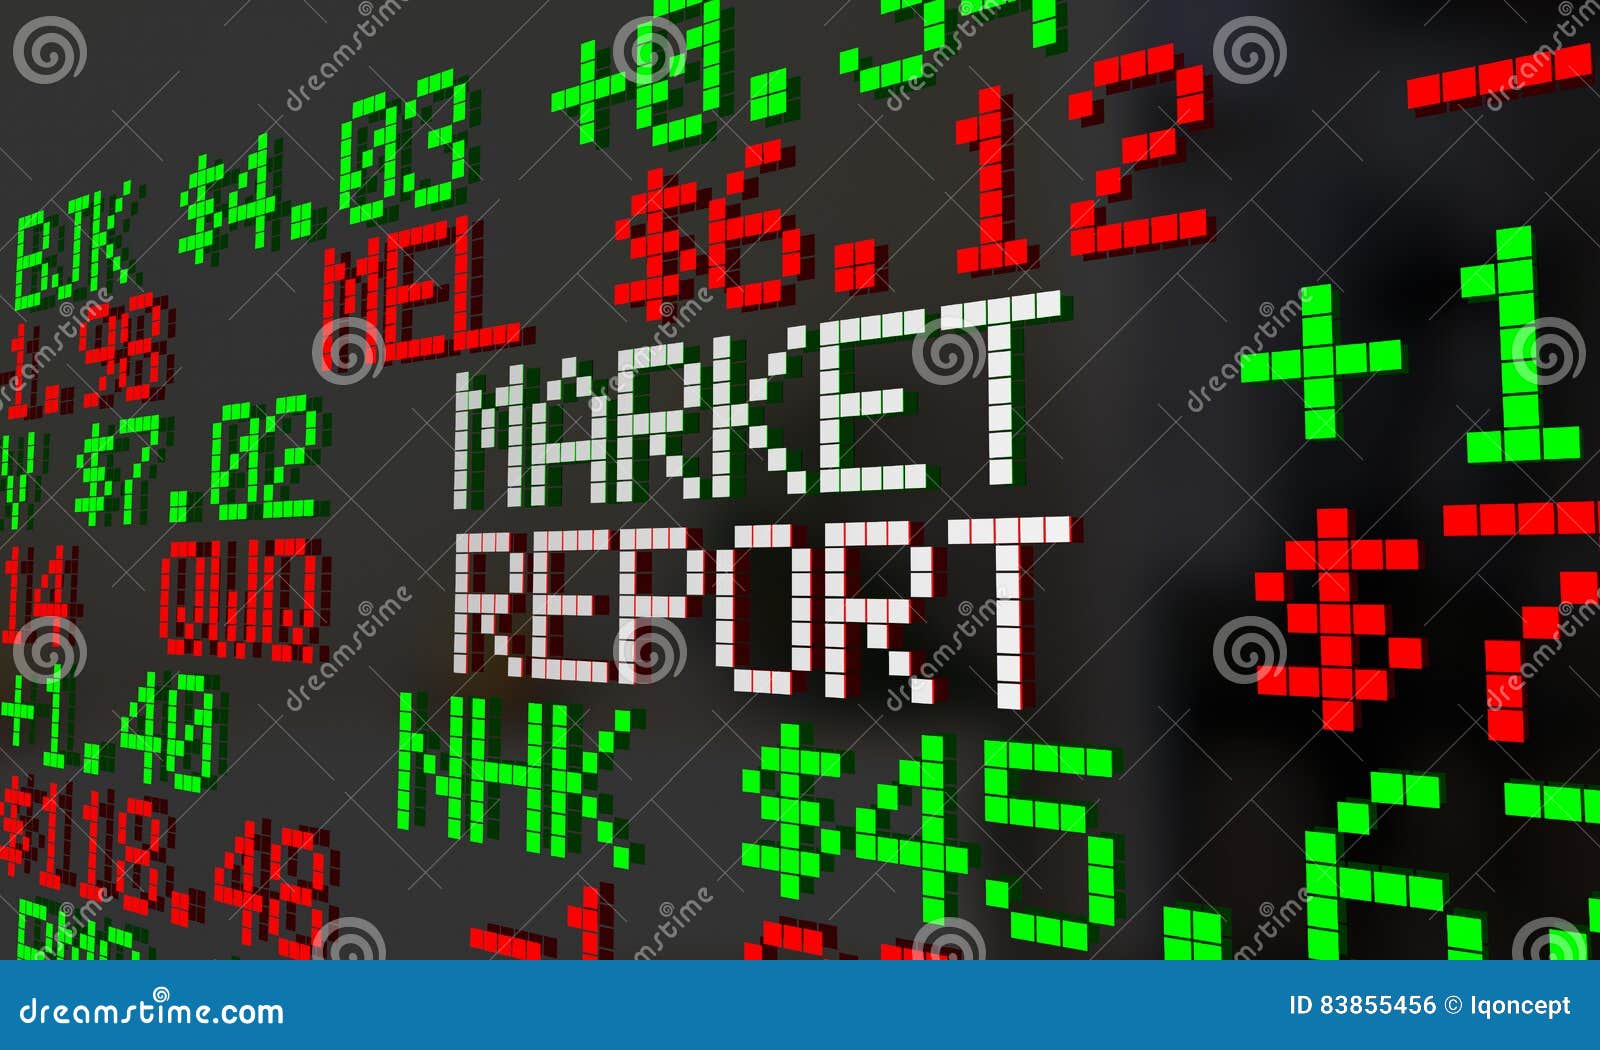 market report news stock wall street price ticker